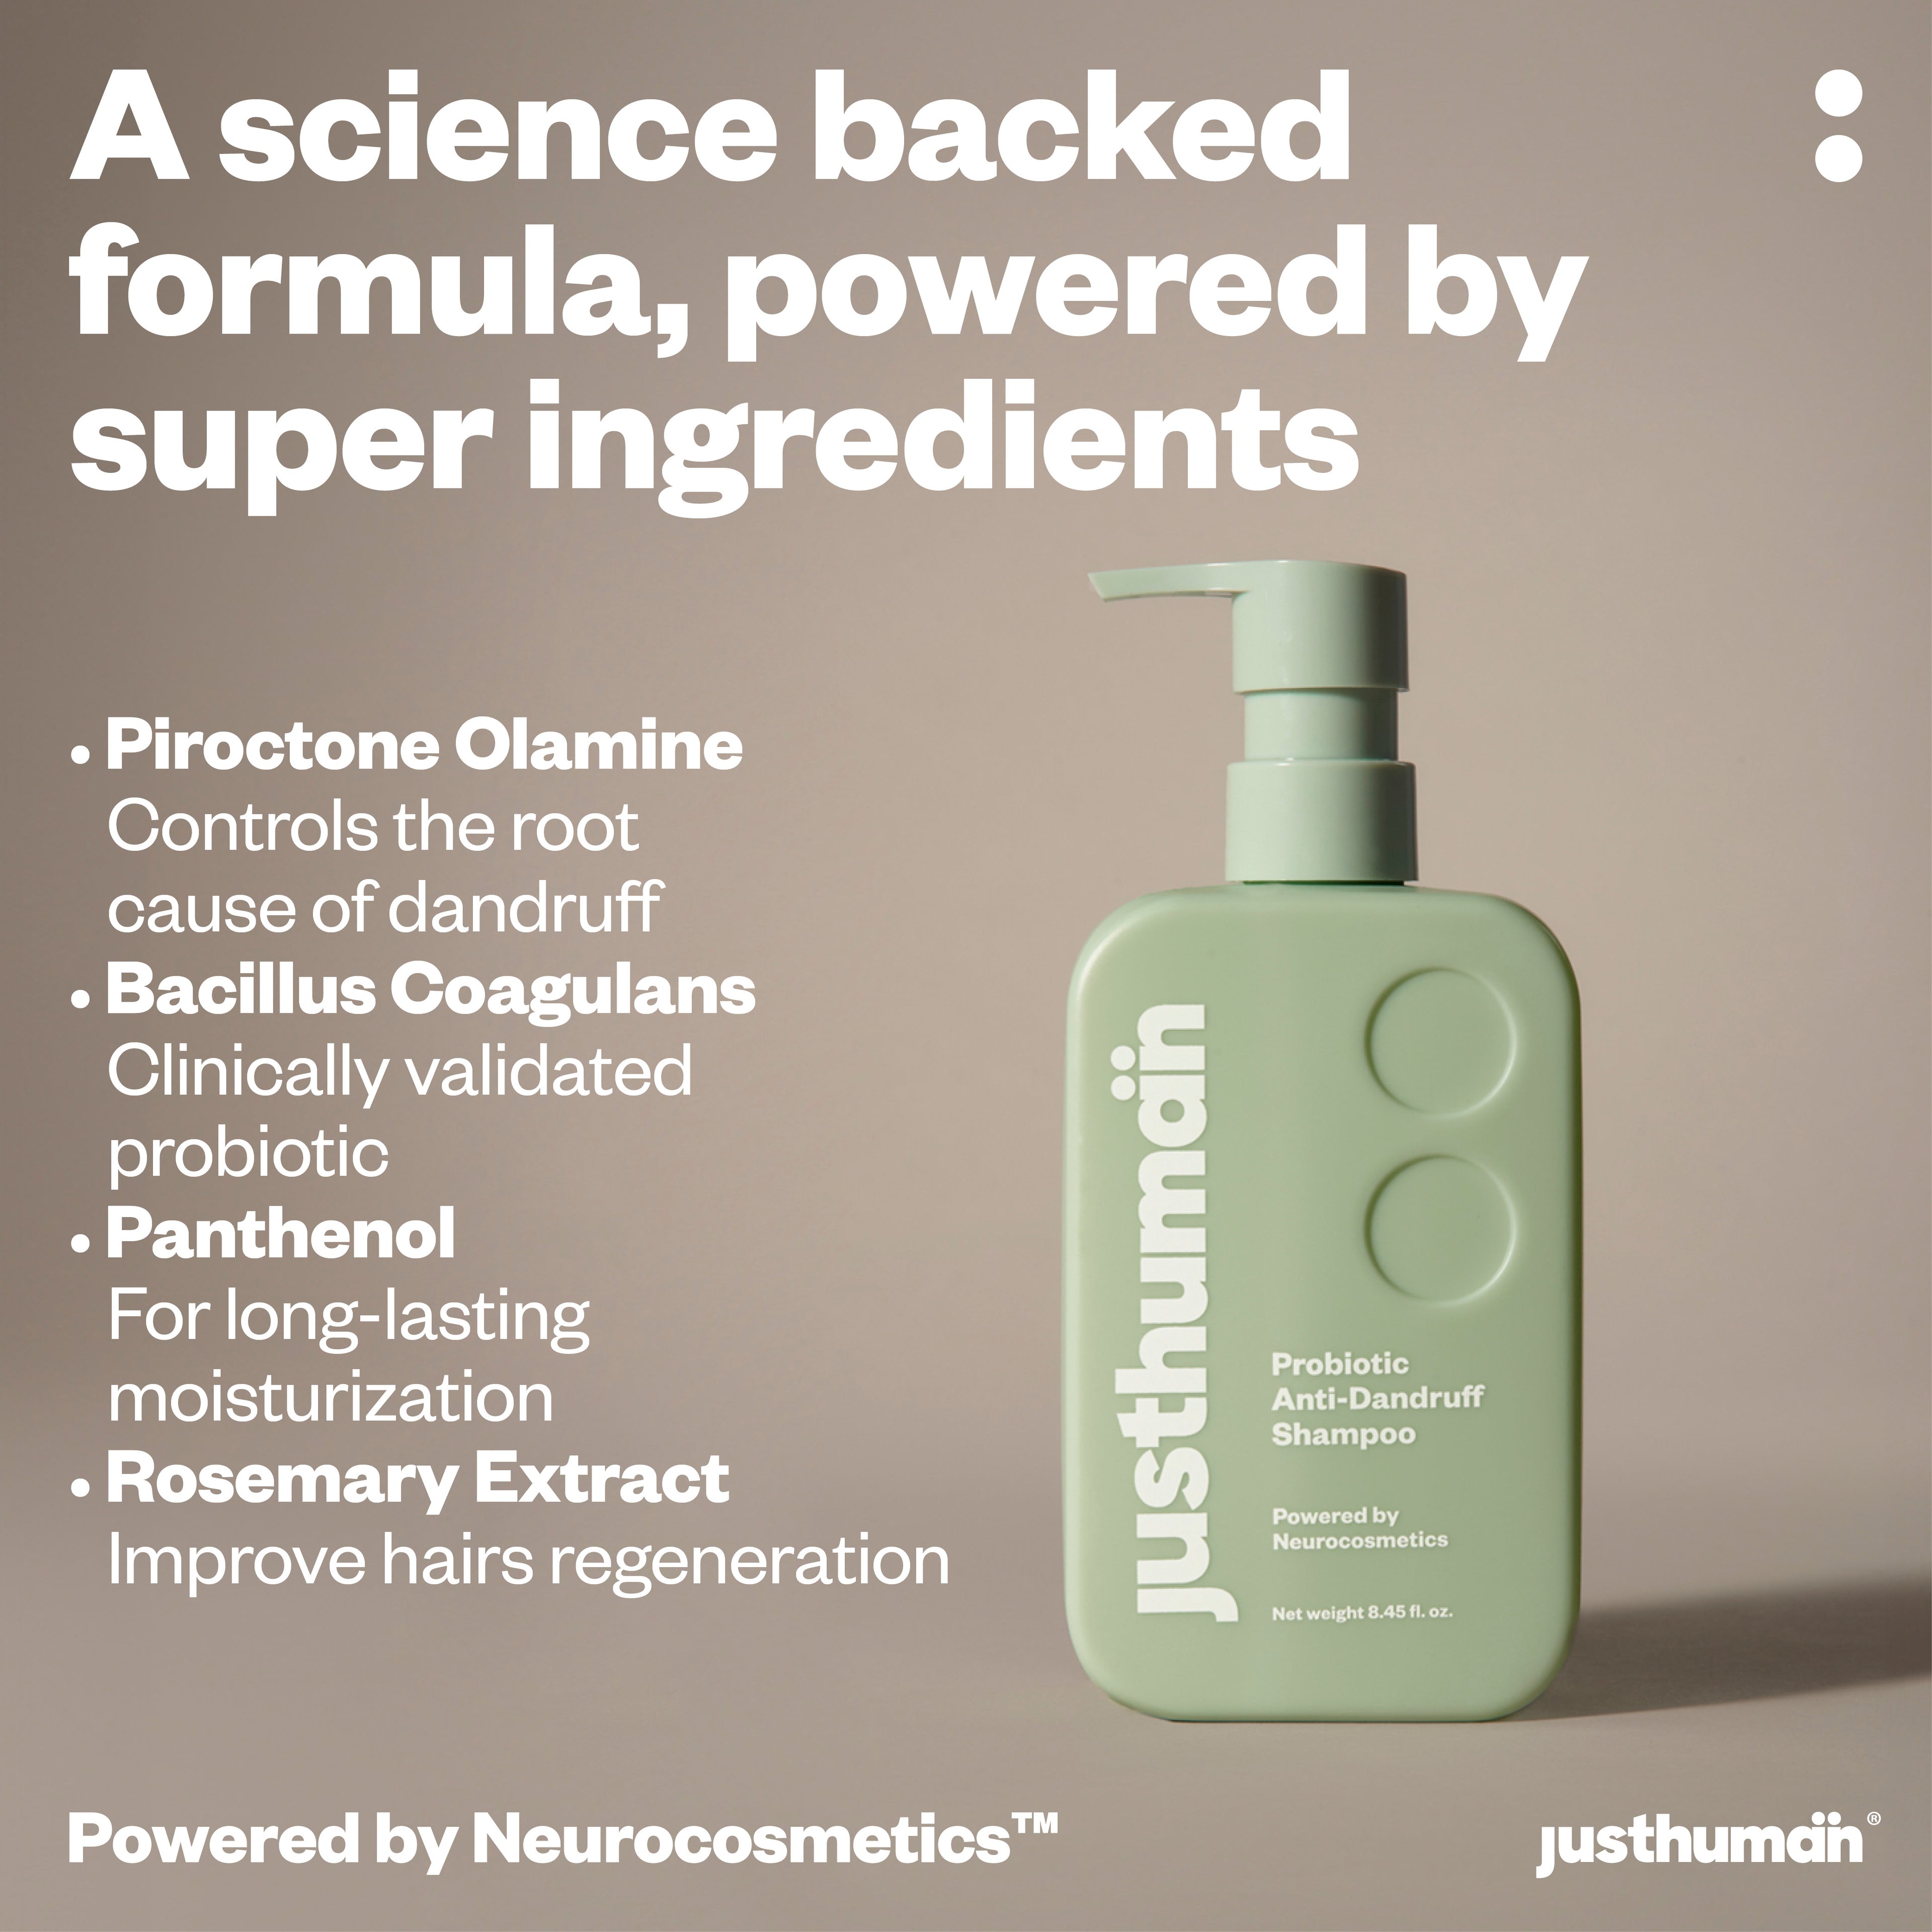 Probiotic Anti-Dandruff Shampoo